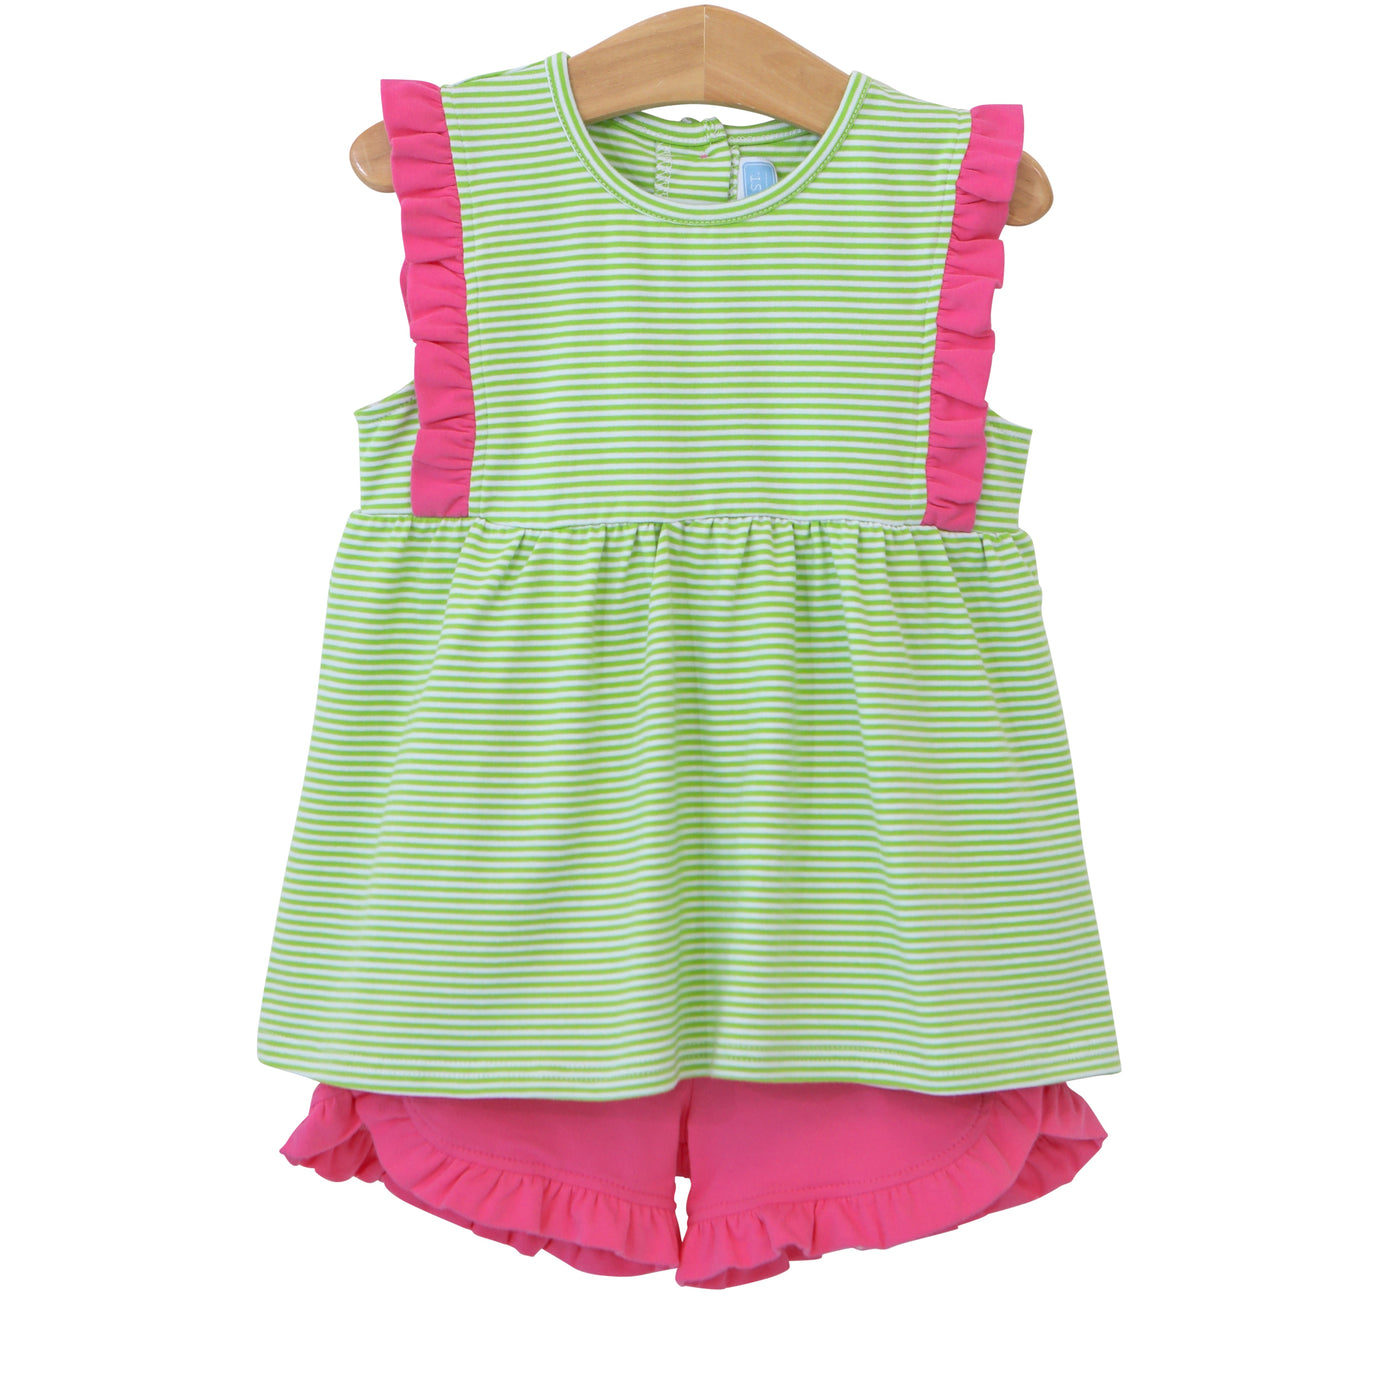 Josie Short Set - Lime Green Stripe/Pink